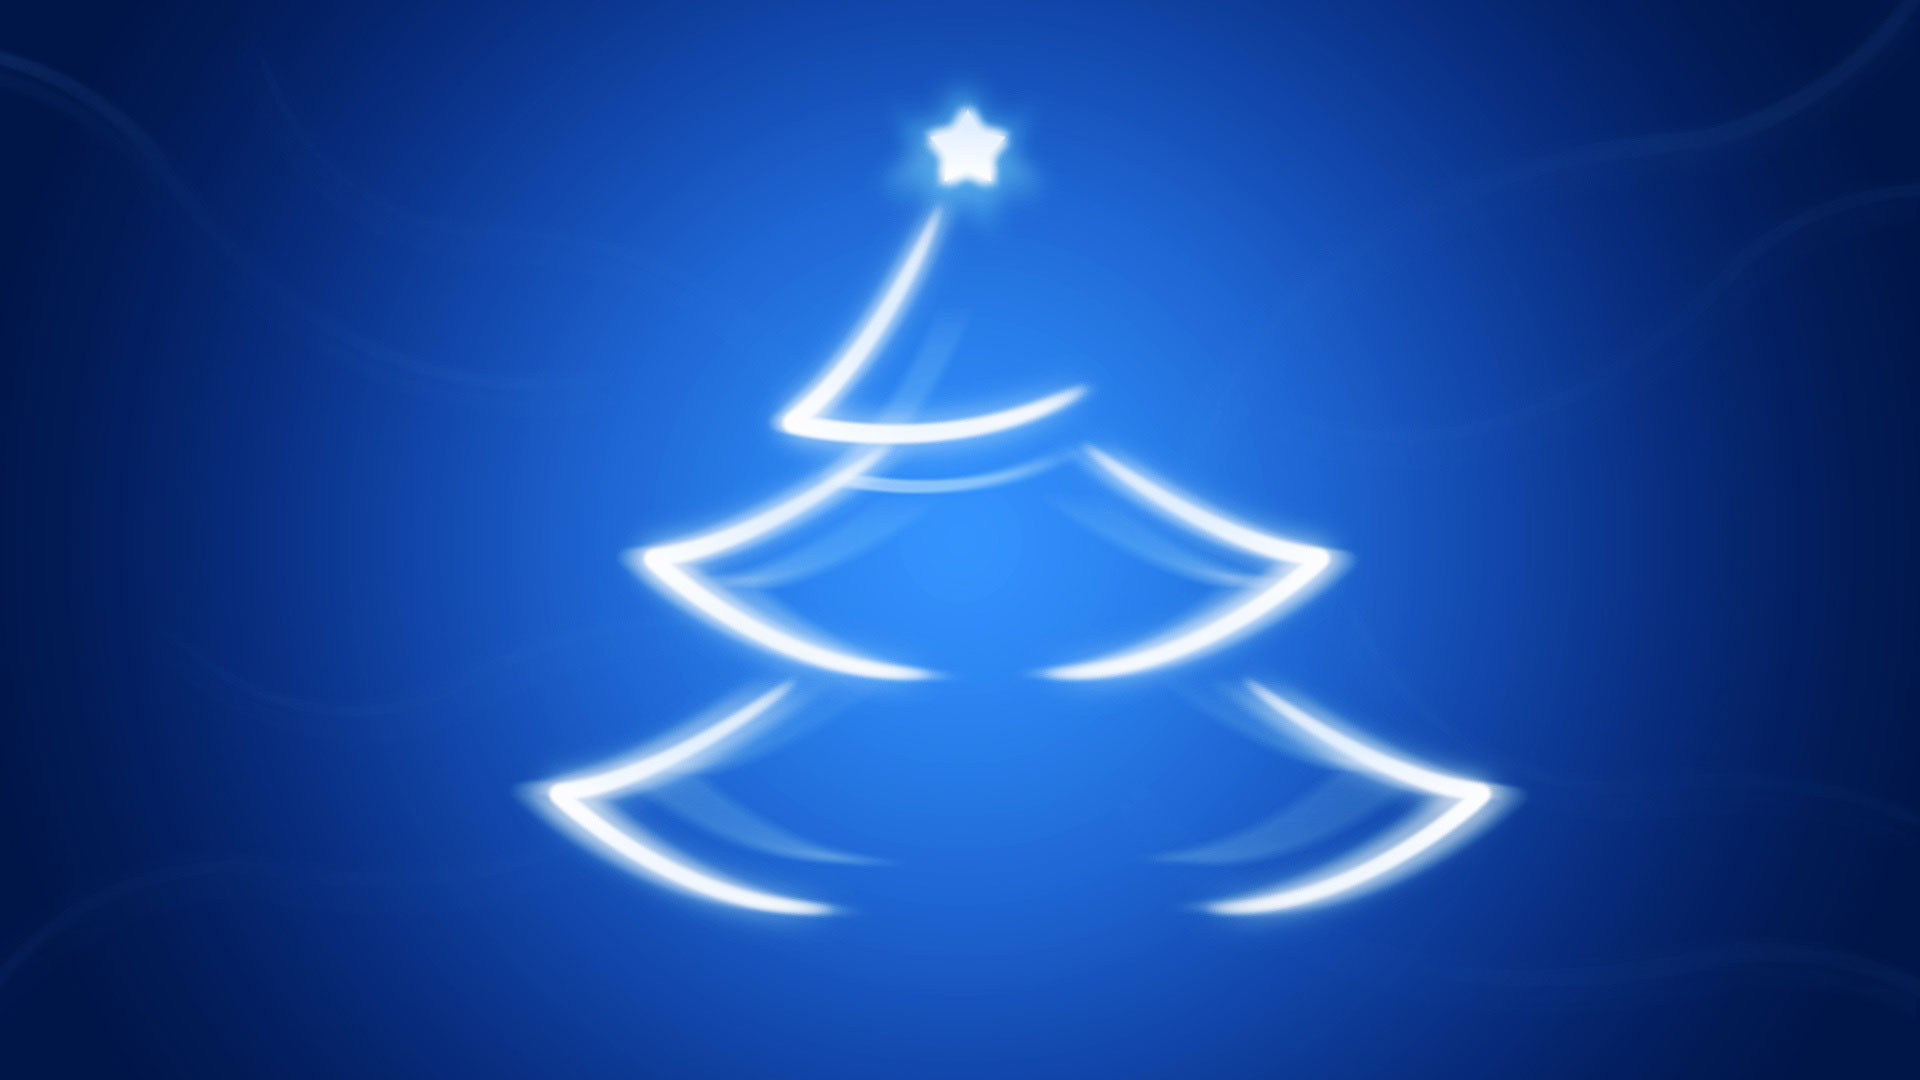 Blue Christmas Tree Wallpaper Hd - HD Wallpaper 